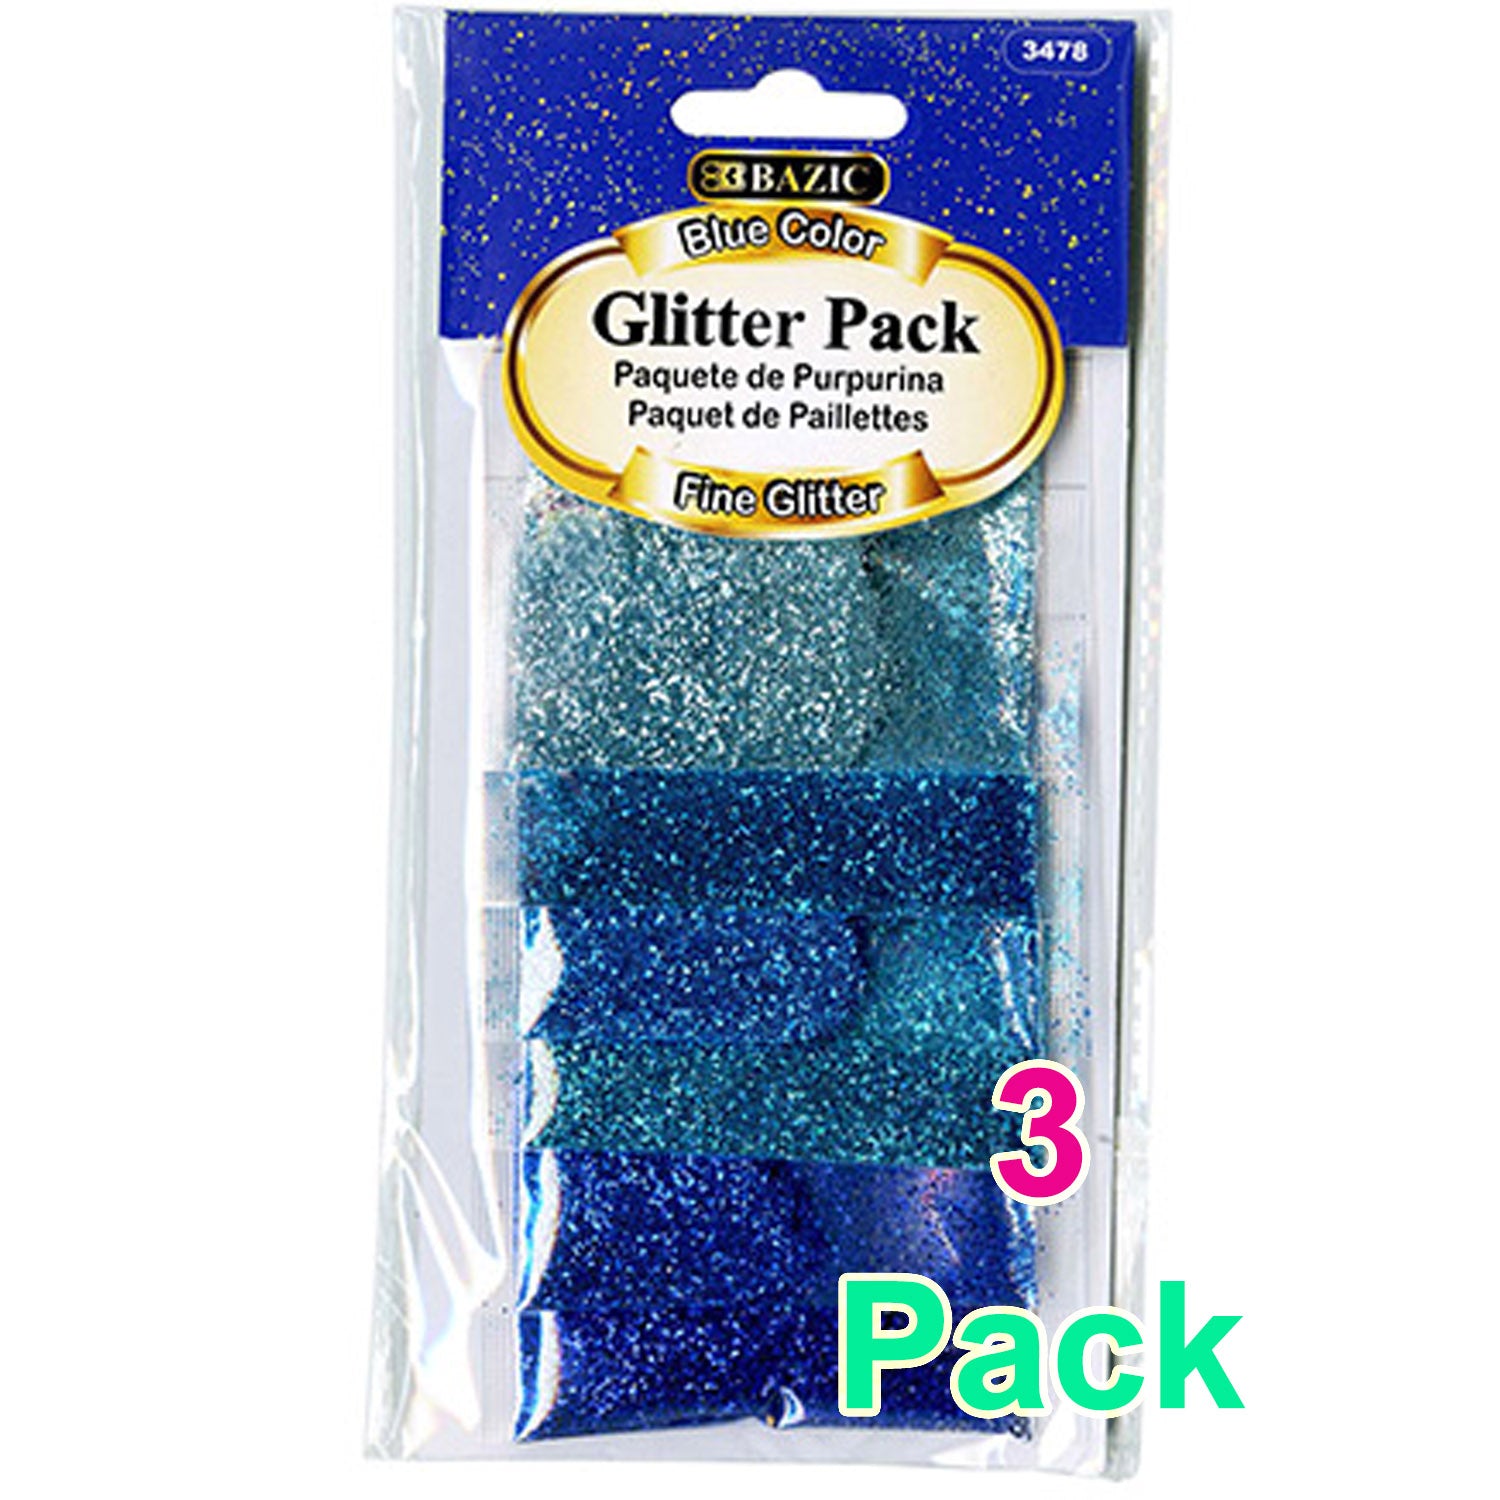 Blue Color Glitter Pack for Your Art - 0.07 oz (2g)24-Pack - G8 Central